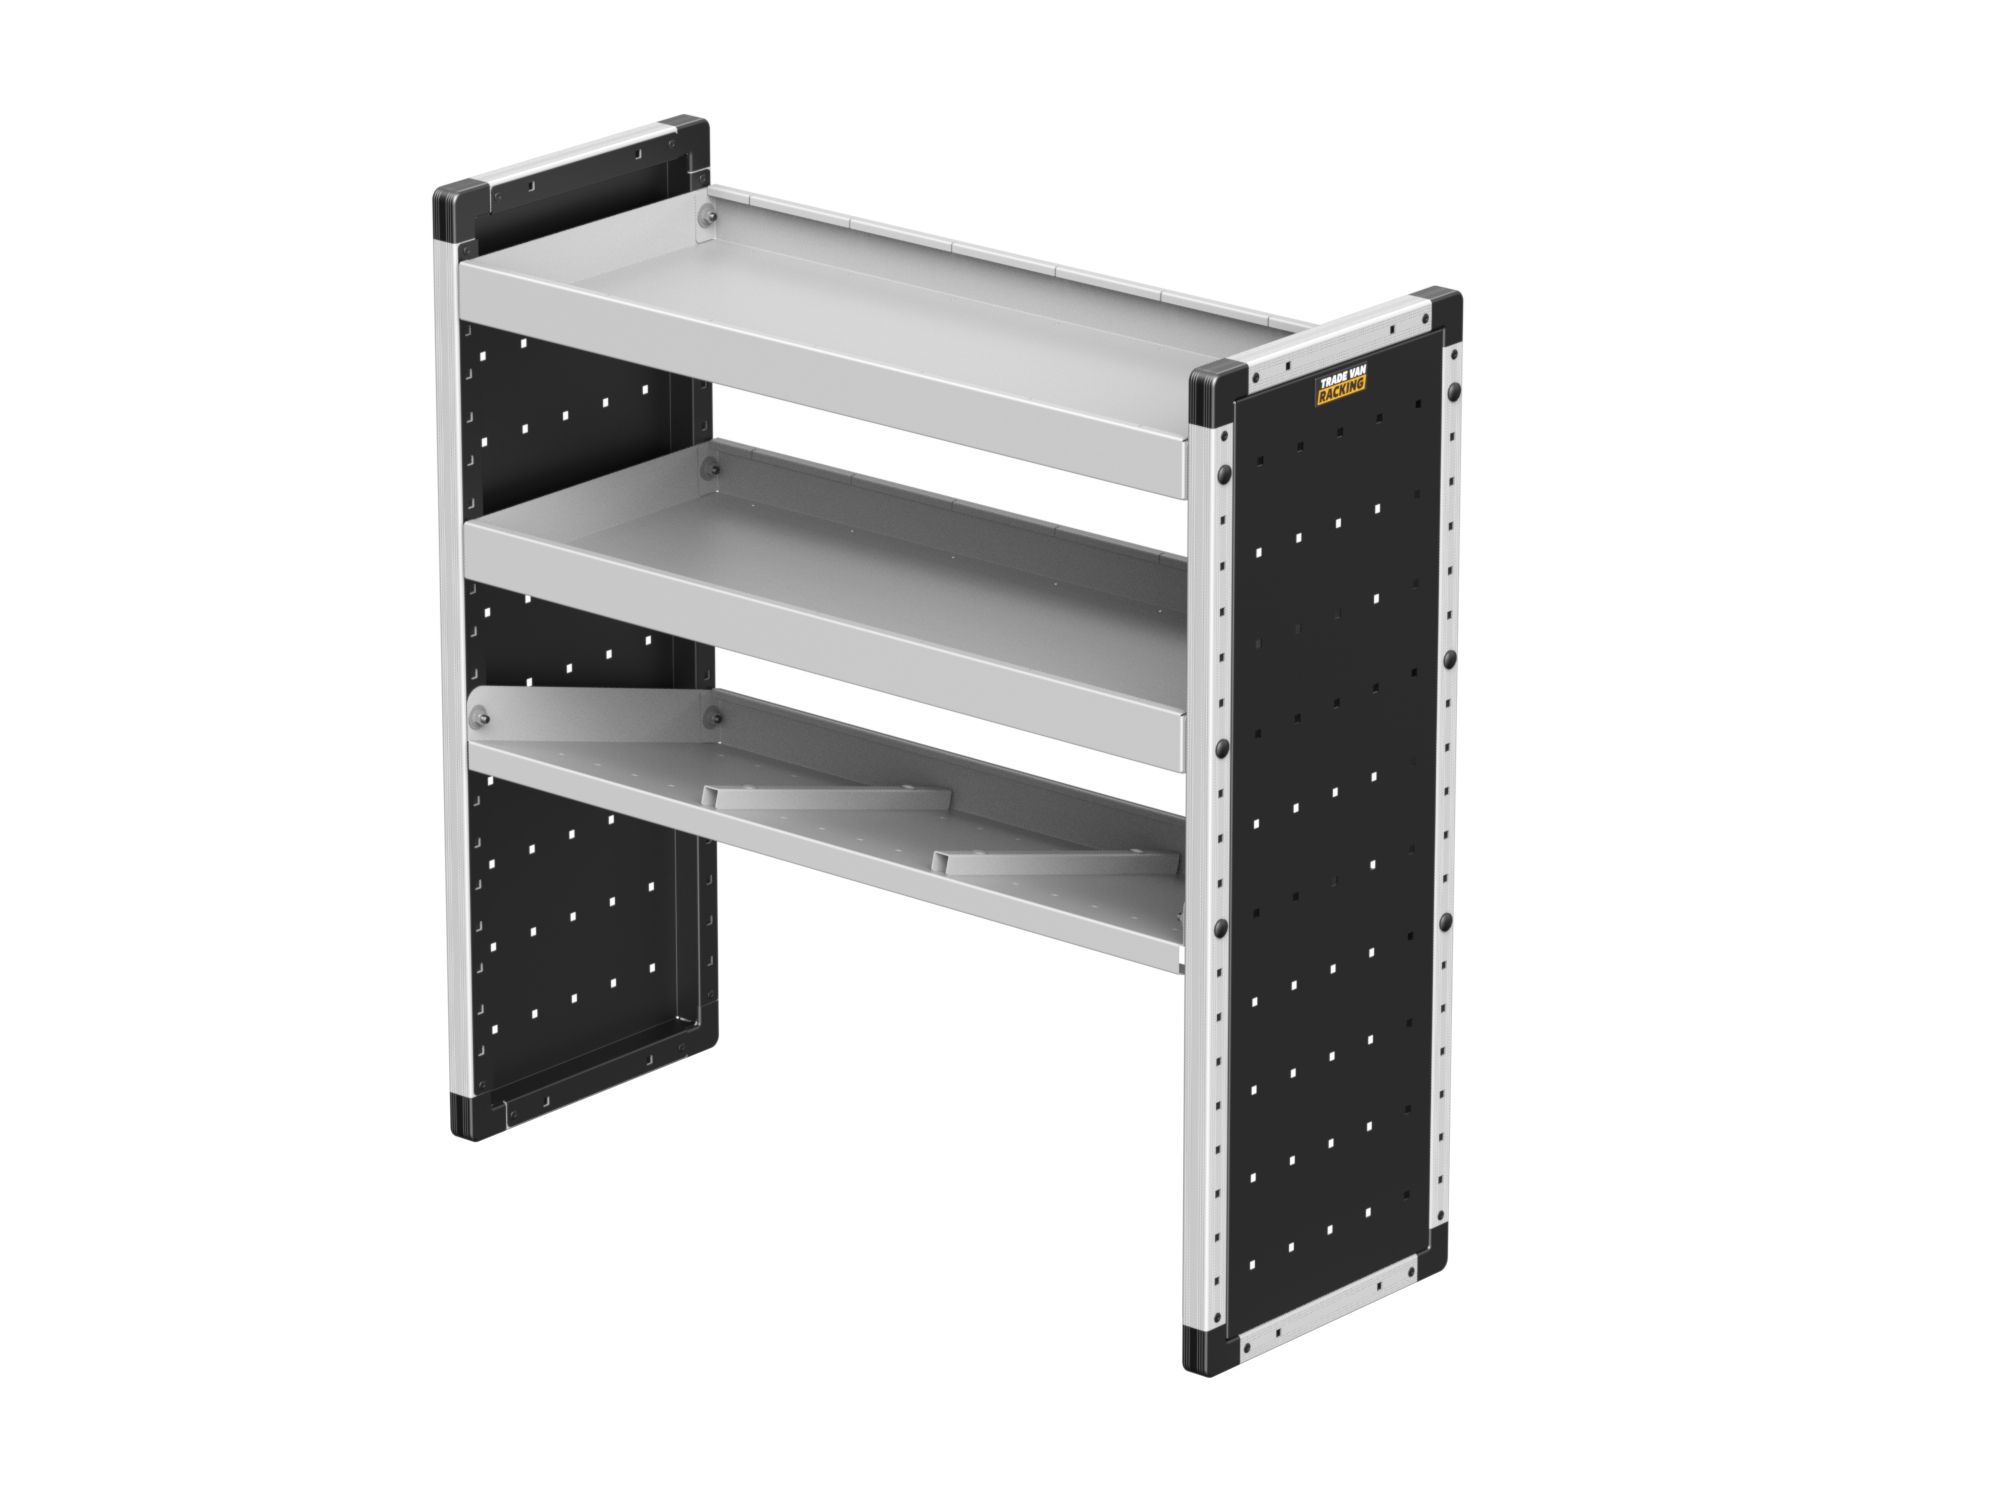 Trade Van Racking - Single Unit - 2 Straight Shelves & 1 Angled Shelf - 1000mm (w) x 1009mm (h) - TVR-203